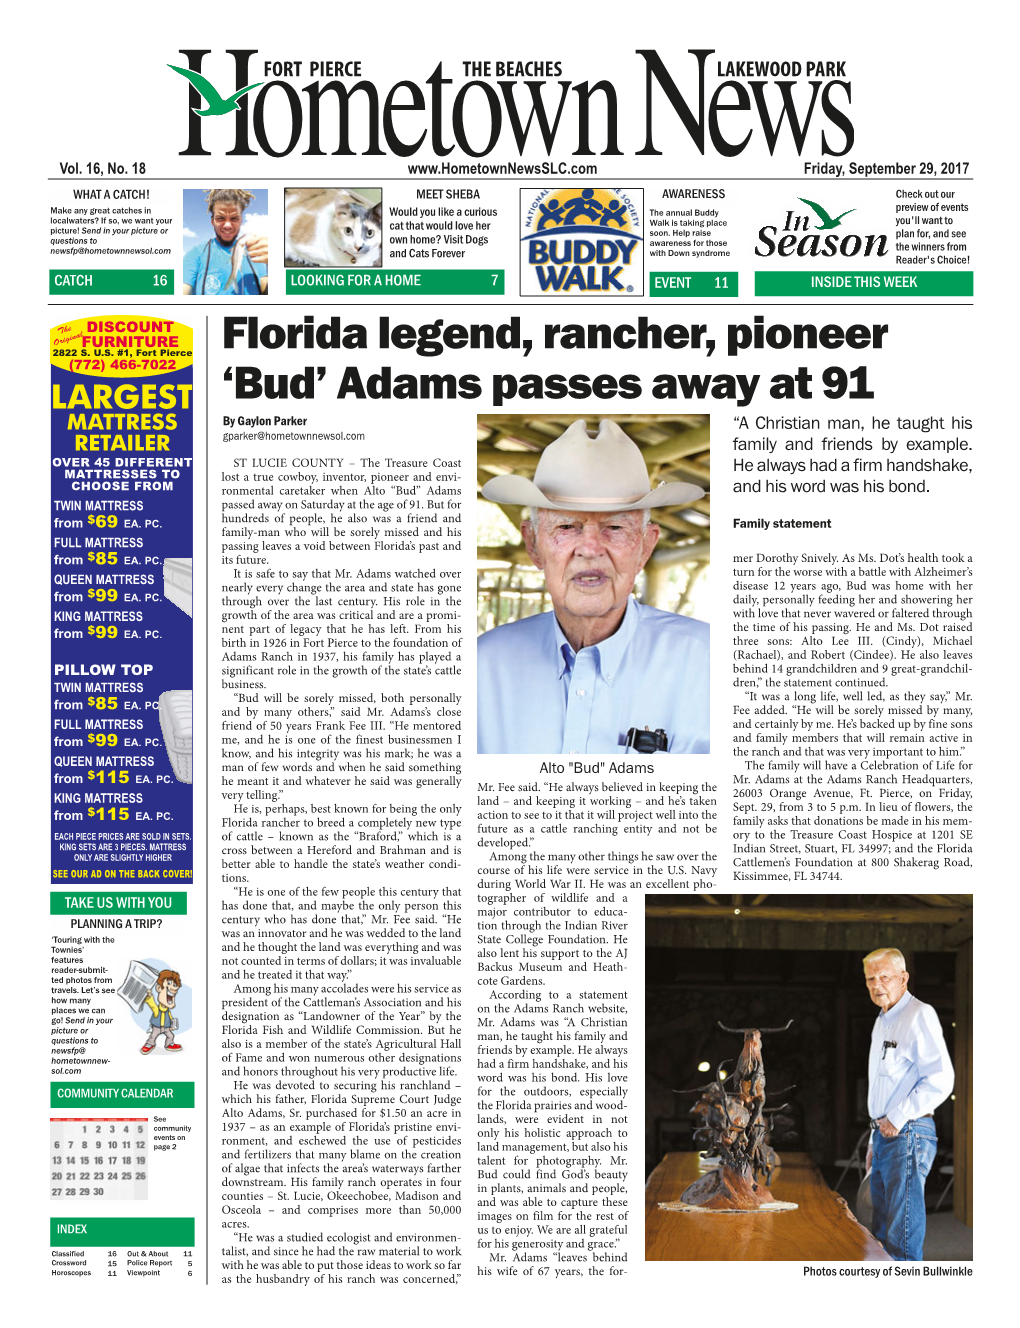 Florida Legend, Rancher, Pioneer 'Bud' Adams Passes Away at 91